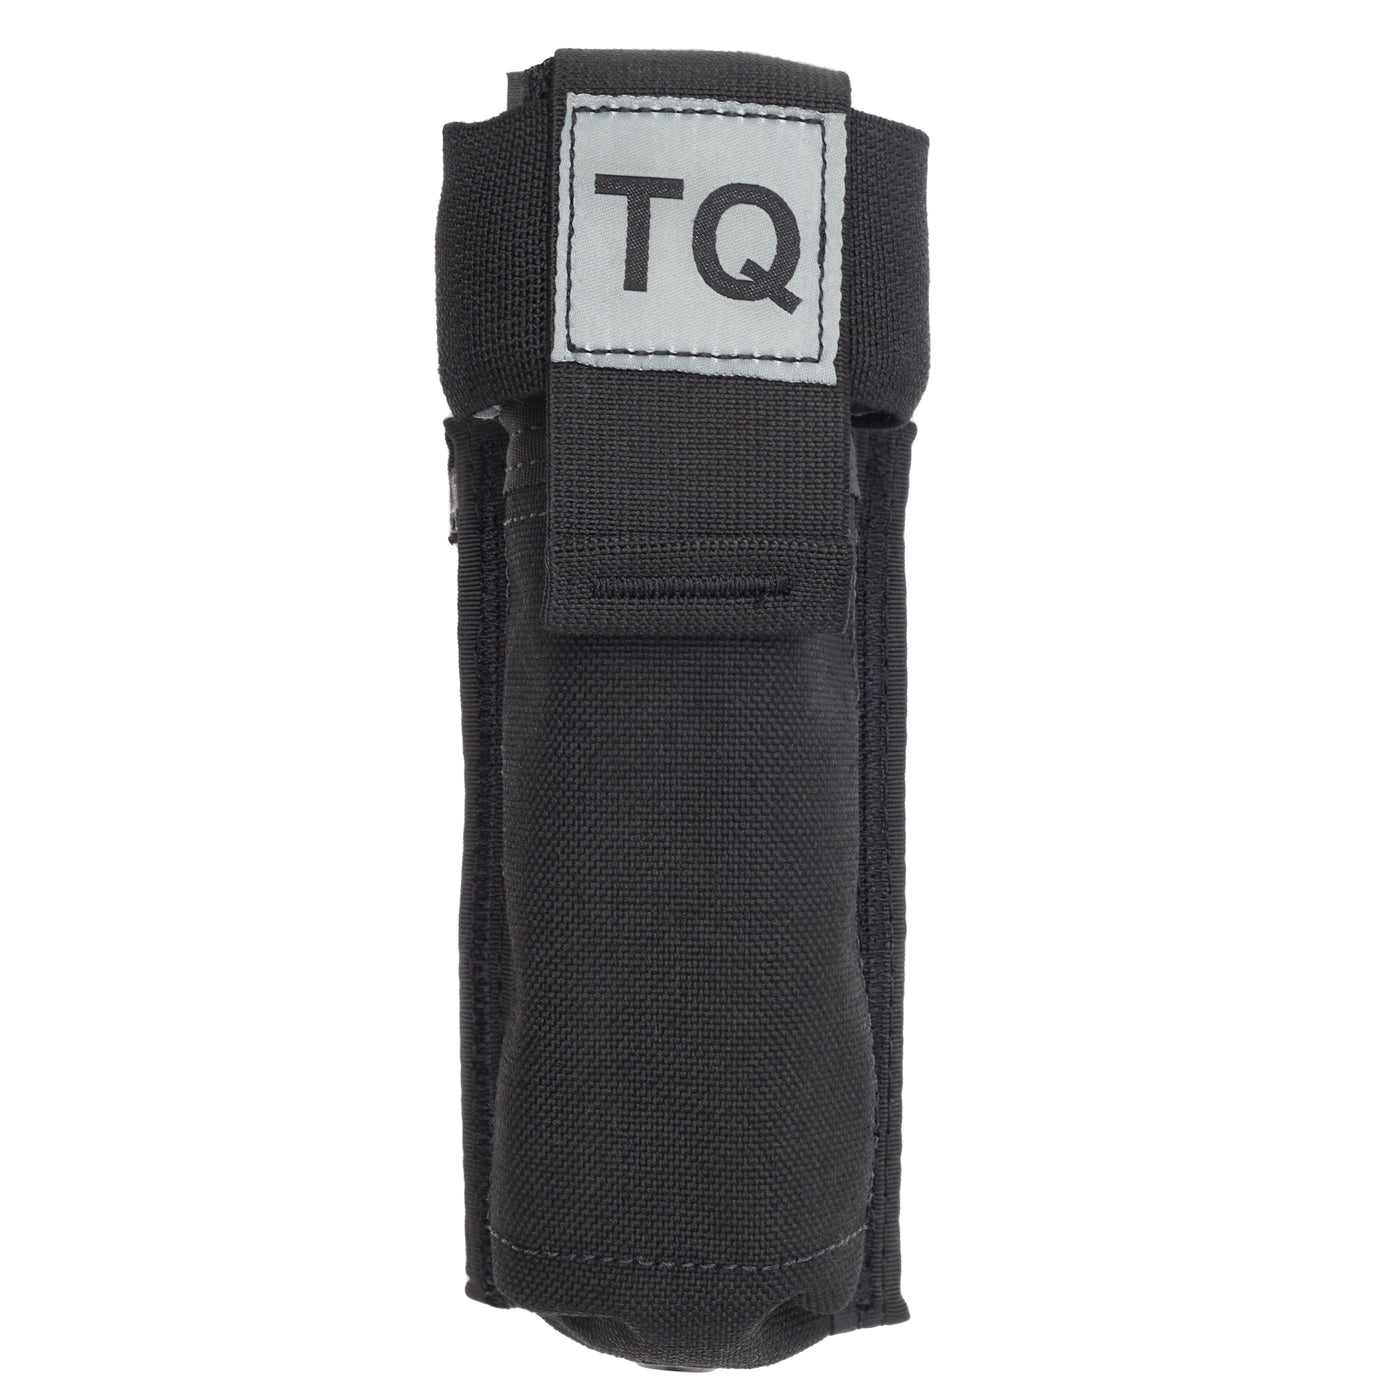 C&G Holsters Sierra soft kit tourniquet holder black